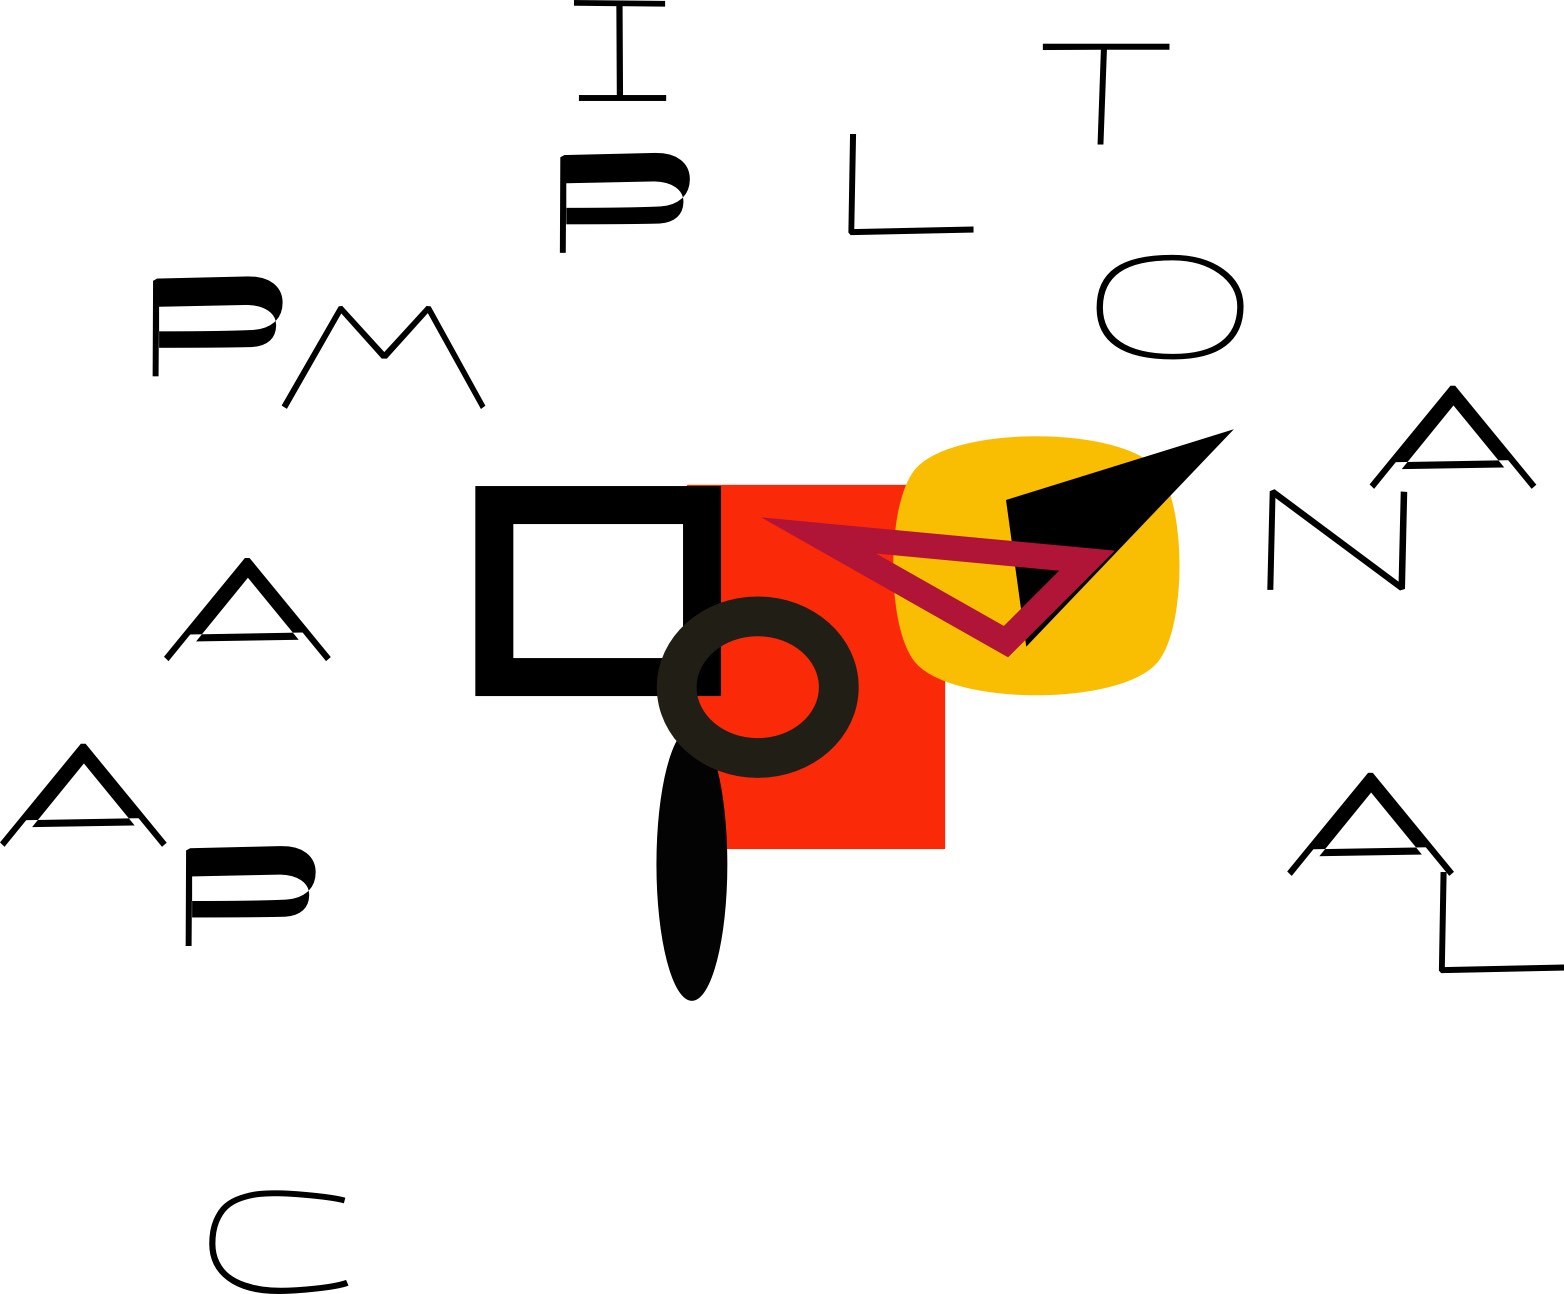 pamplona capital logo